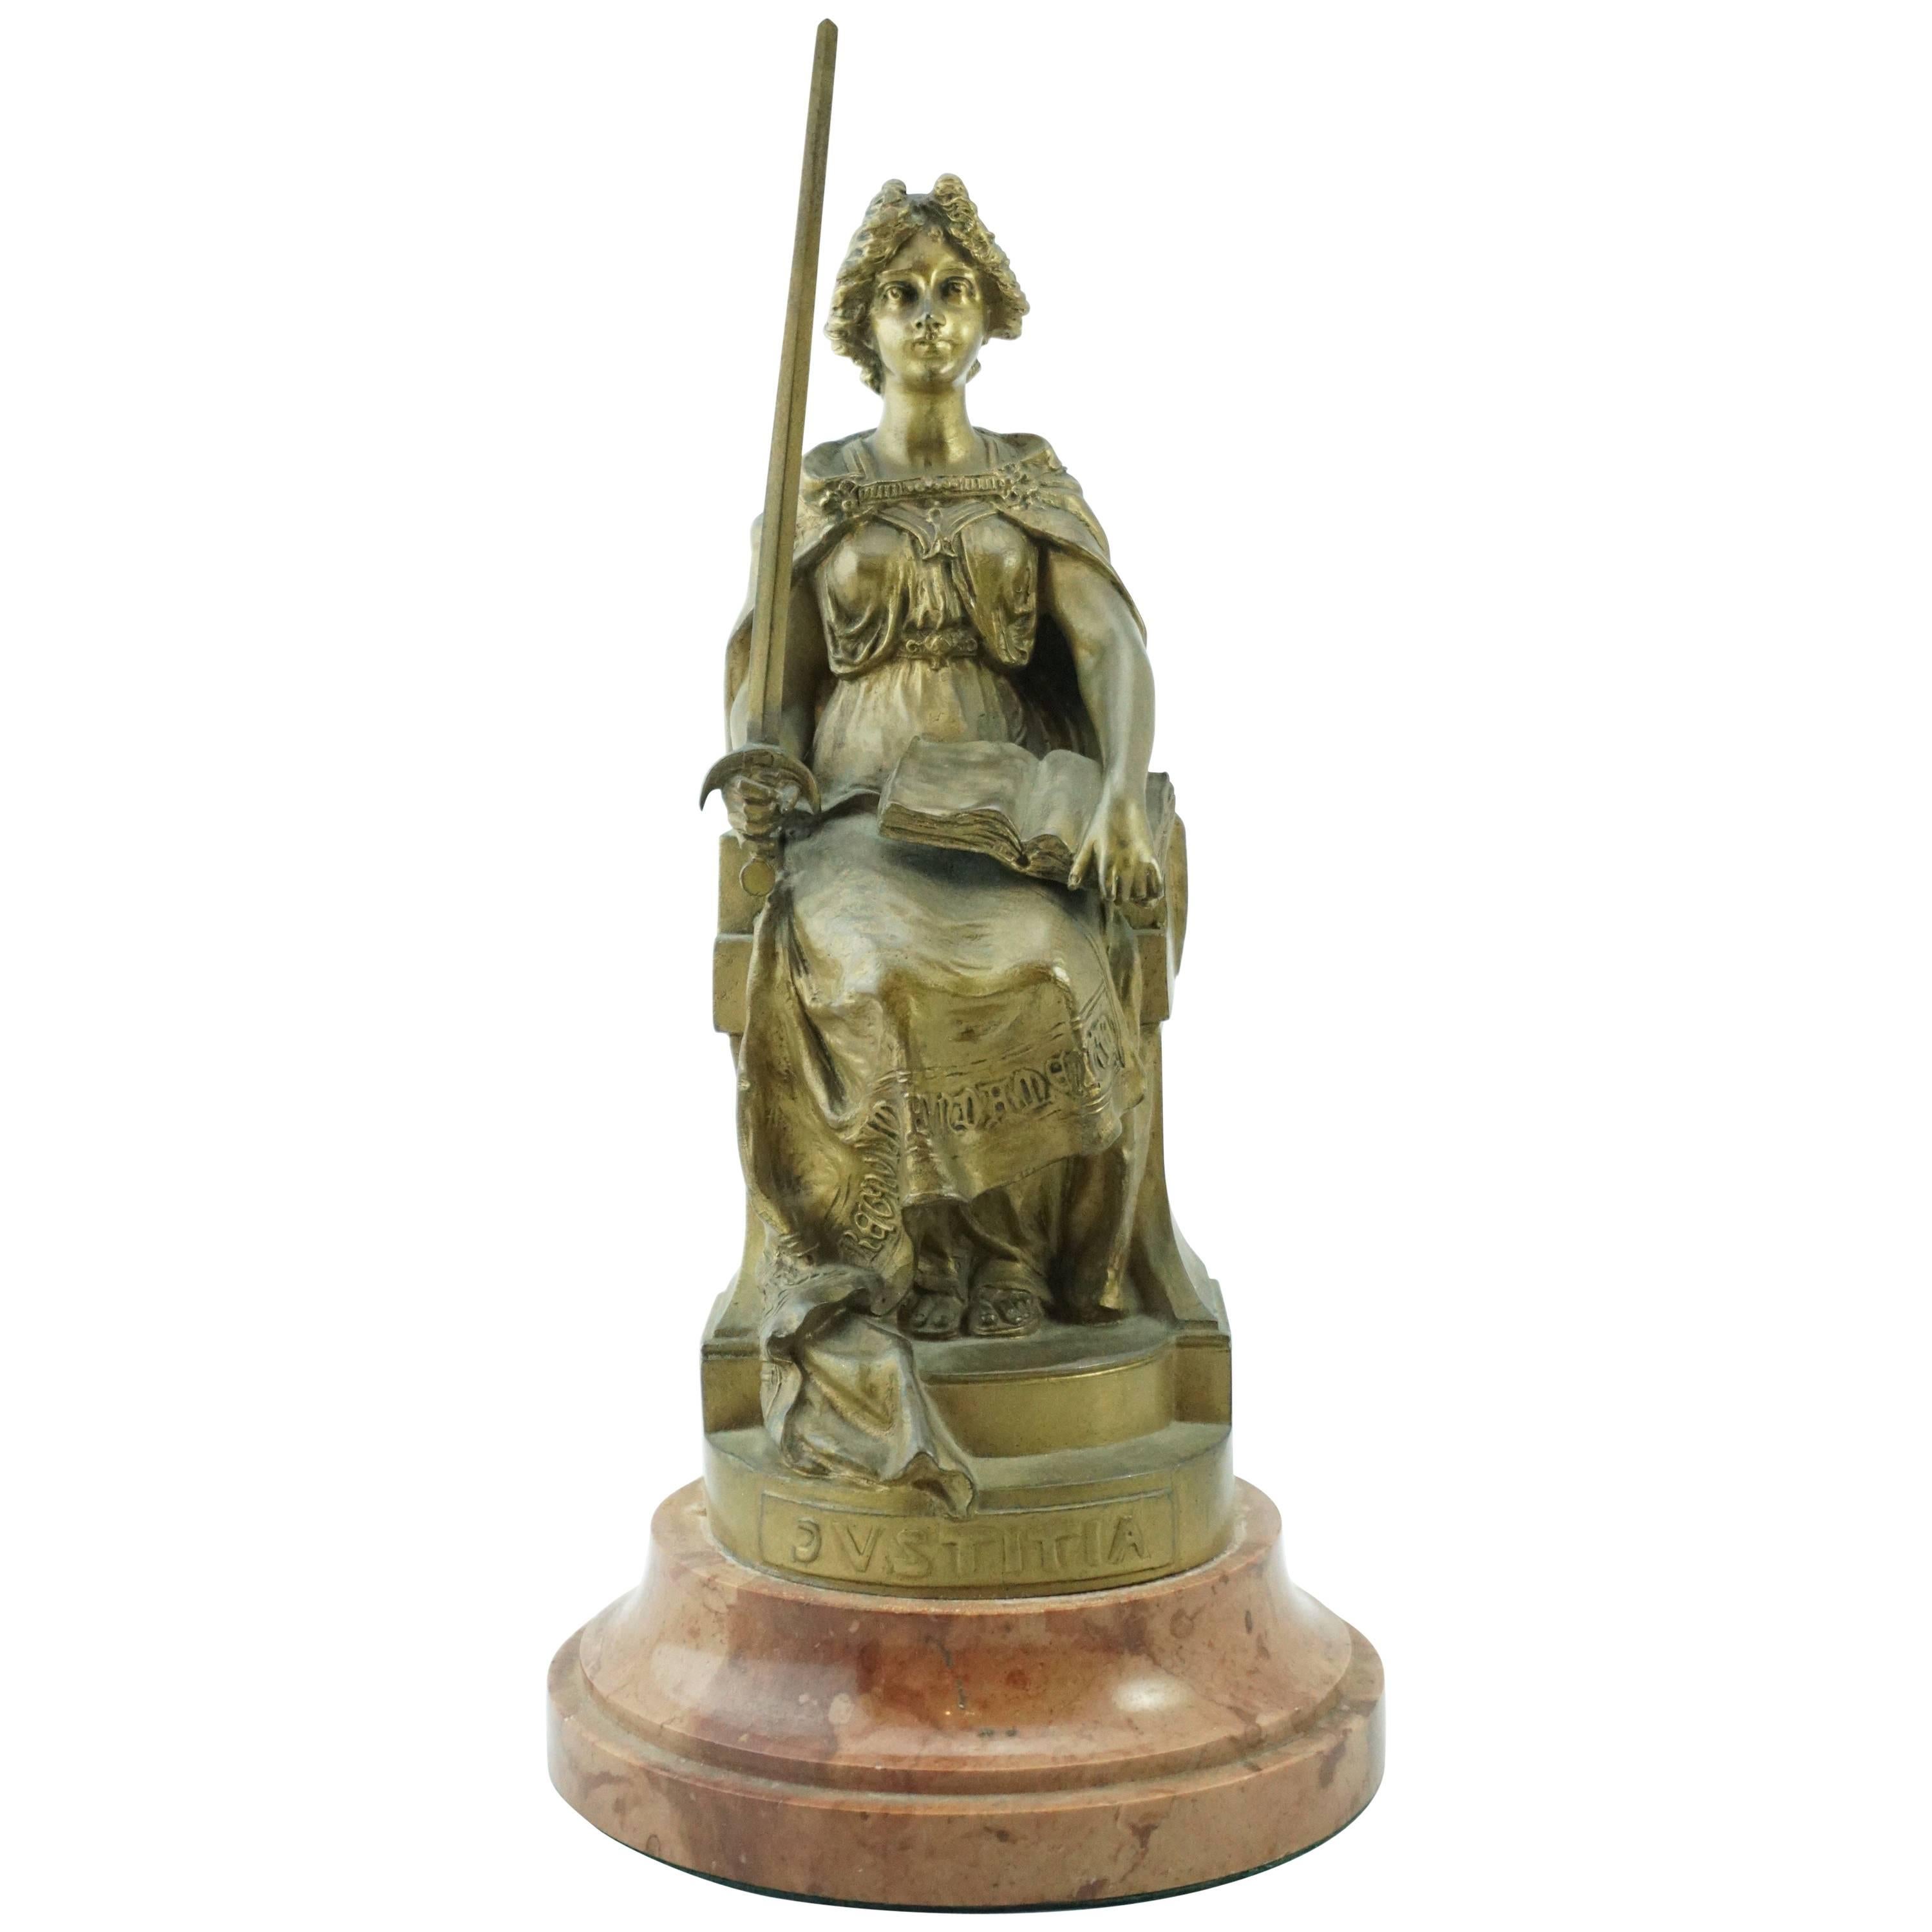 Carl Kauba Bronze Figure of "Justitia" Seated Woman with Sword